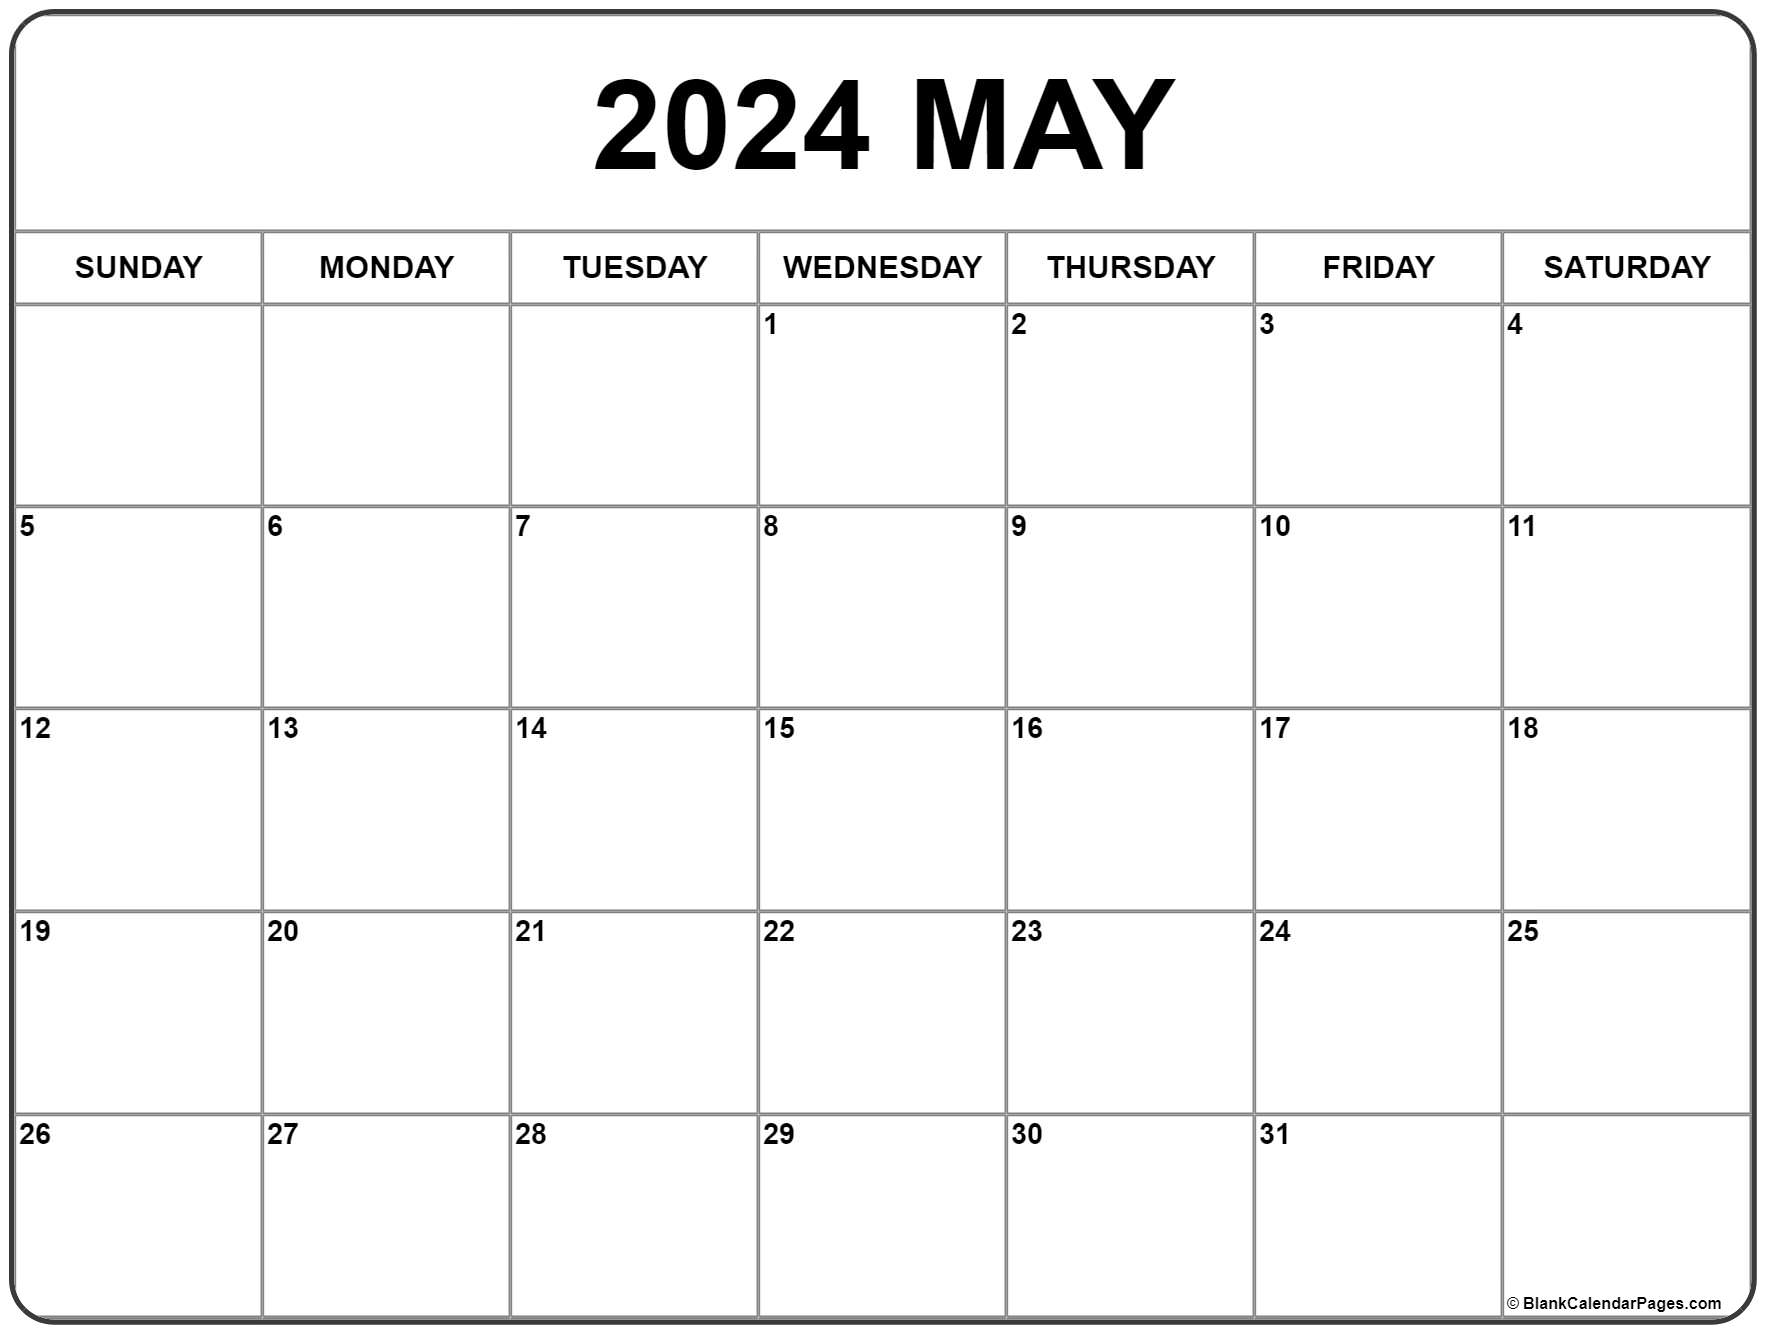 Blank May 2021 Calendar May 2021 calendar | free printable monthly calendars